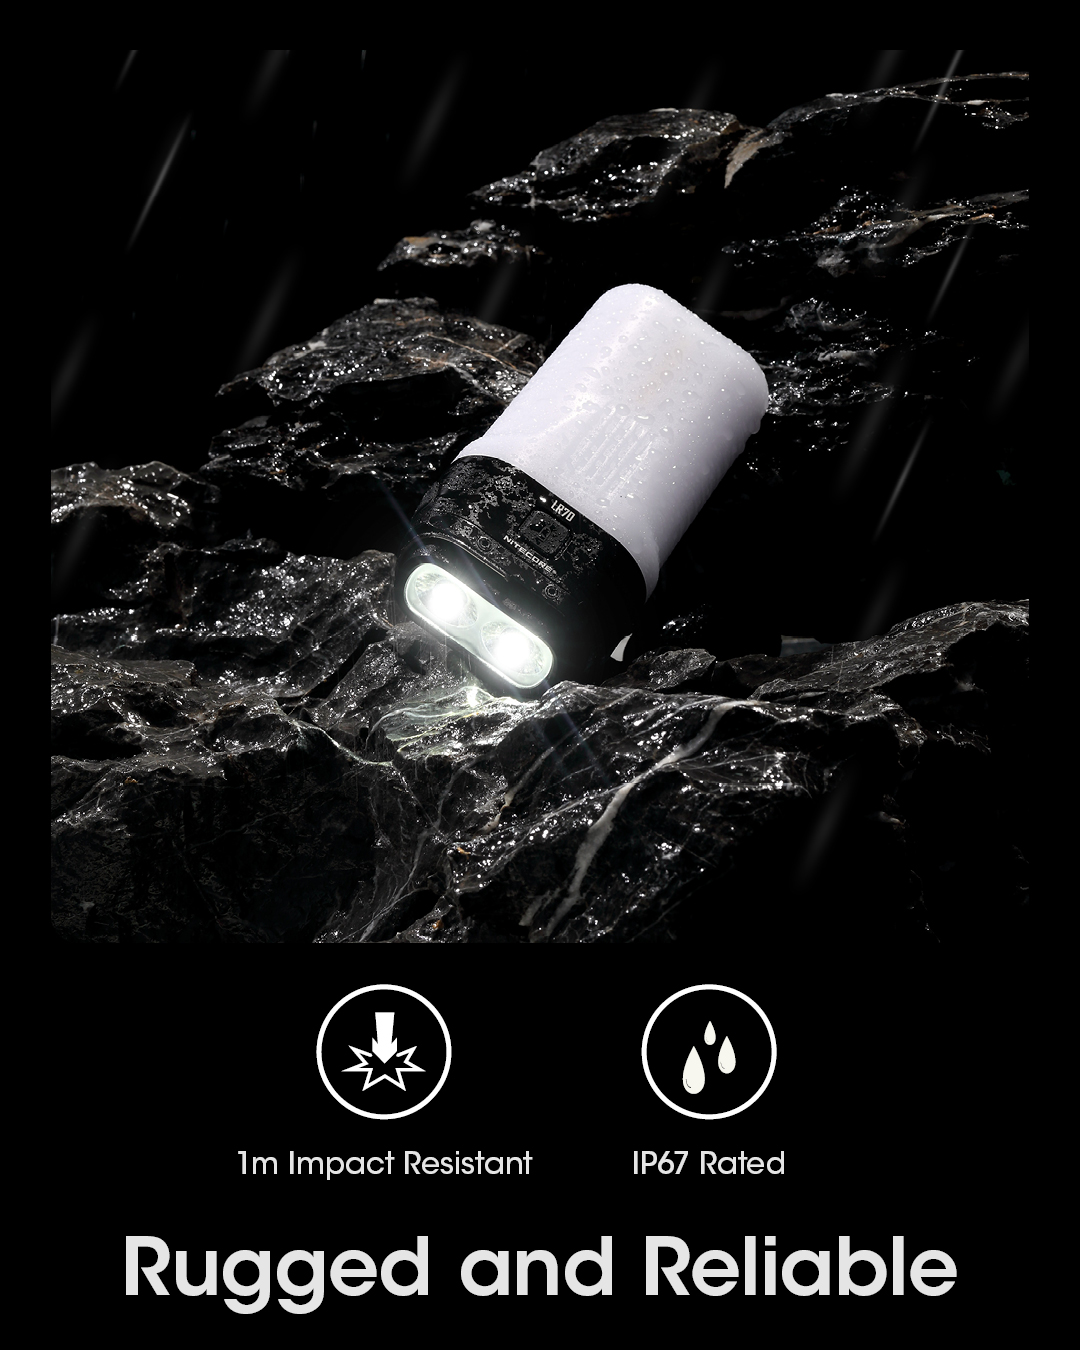 Nitecore LR70 3000 lumen Rechargeable Lantern Flashlight